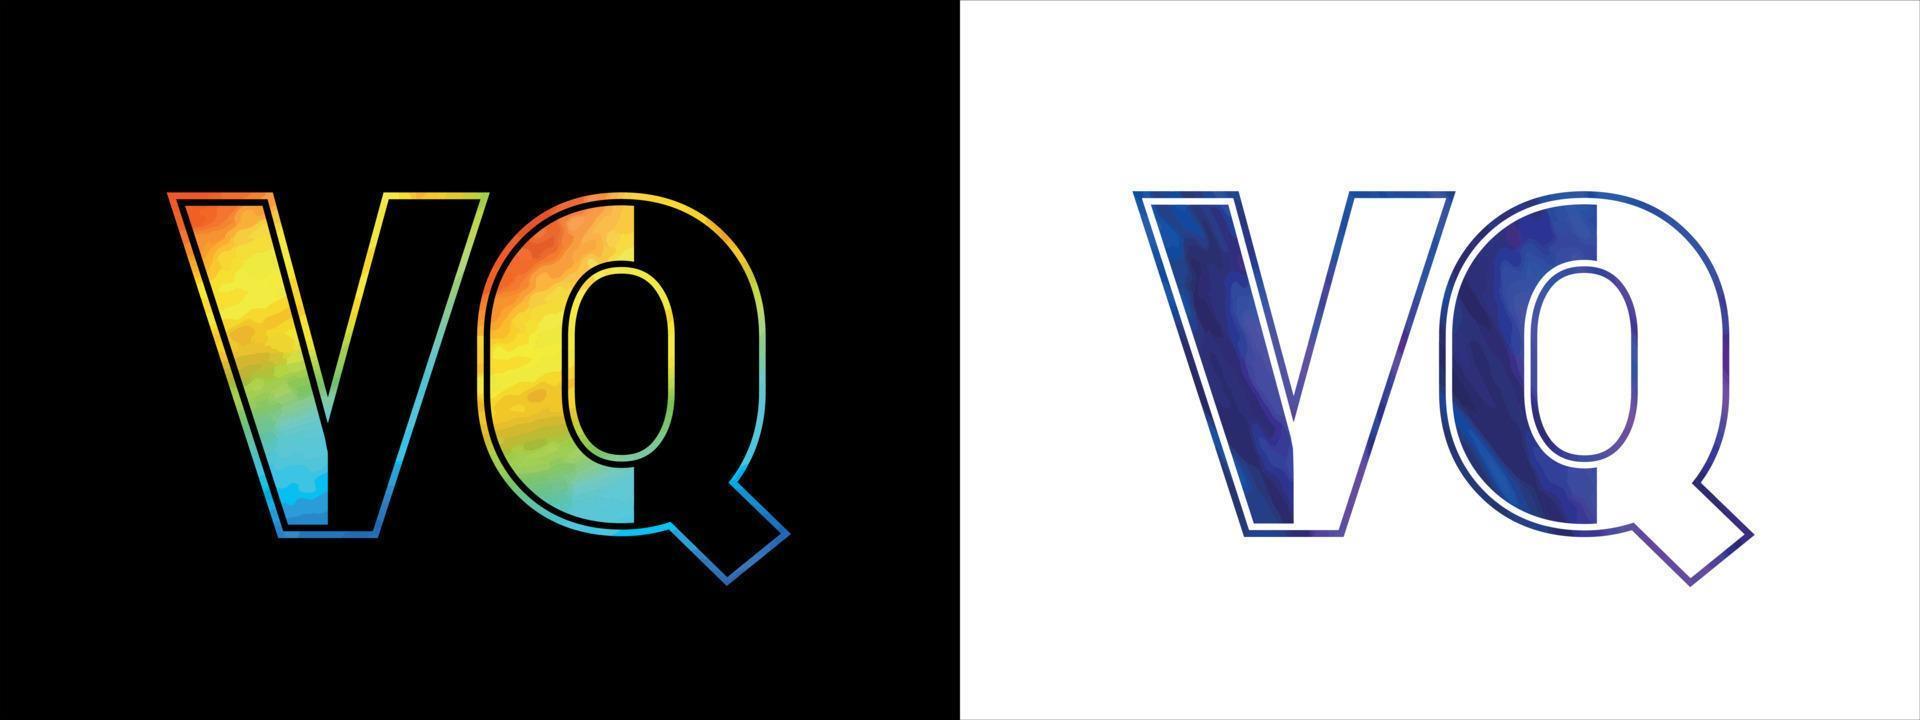 letra vq logo diseño vector modelo. creativo moderno lujoso logotipo para corporativo negocio identidad